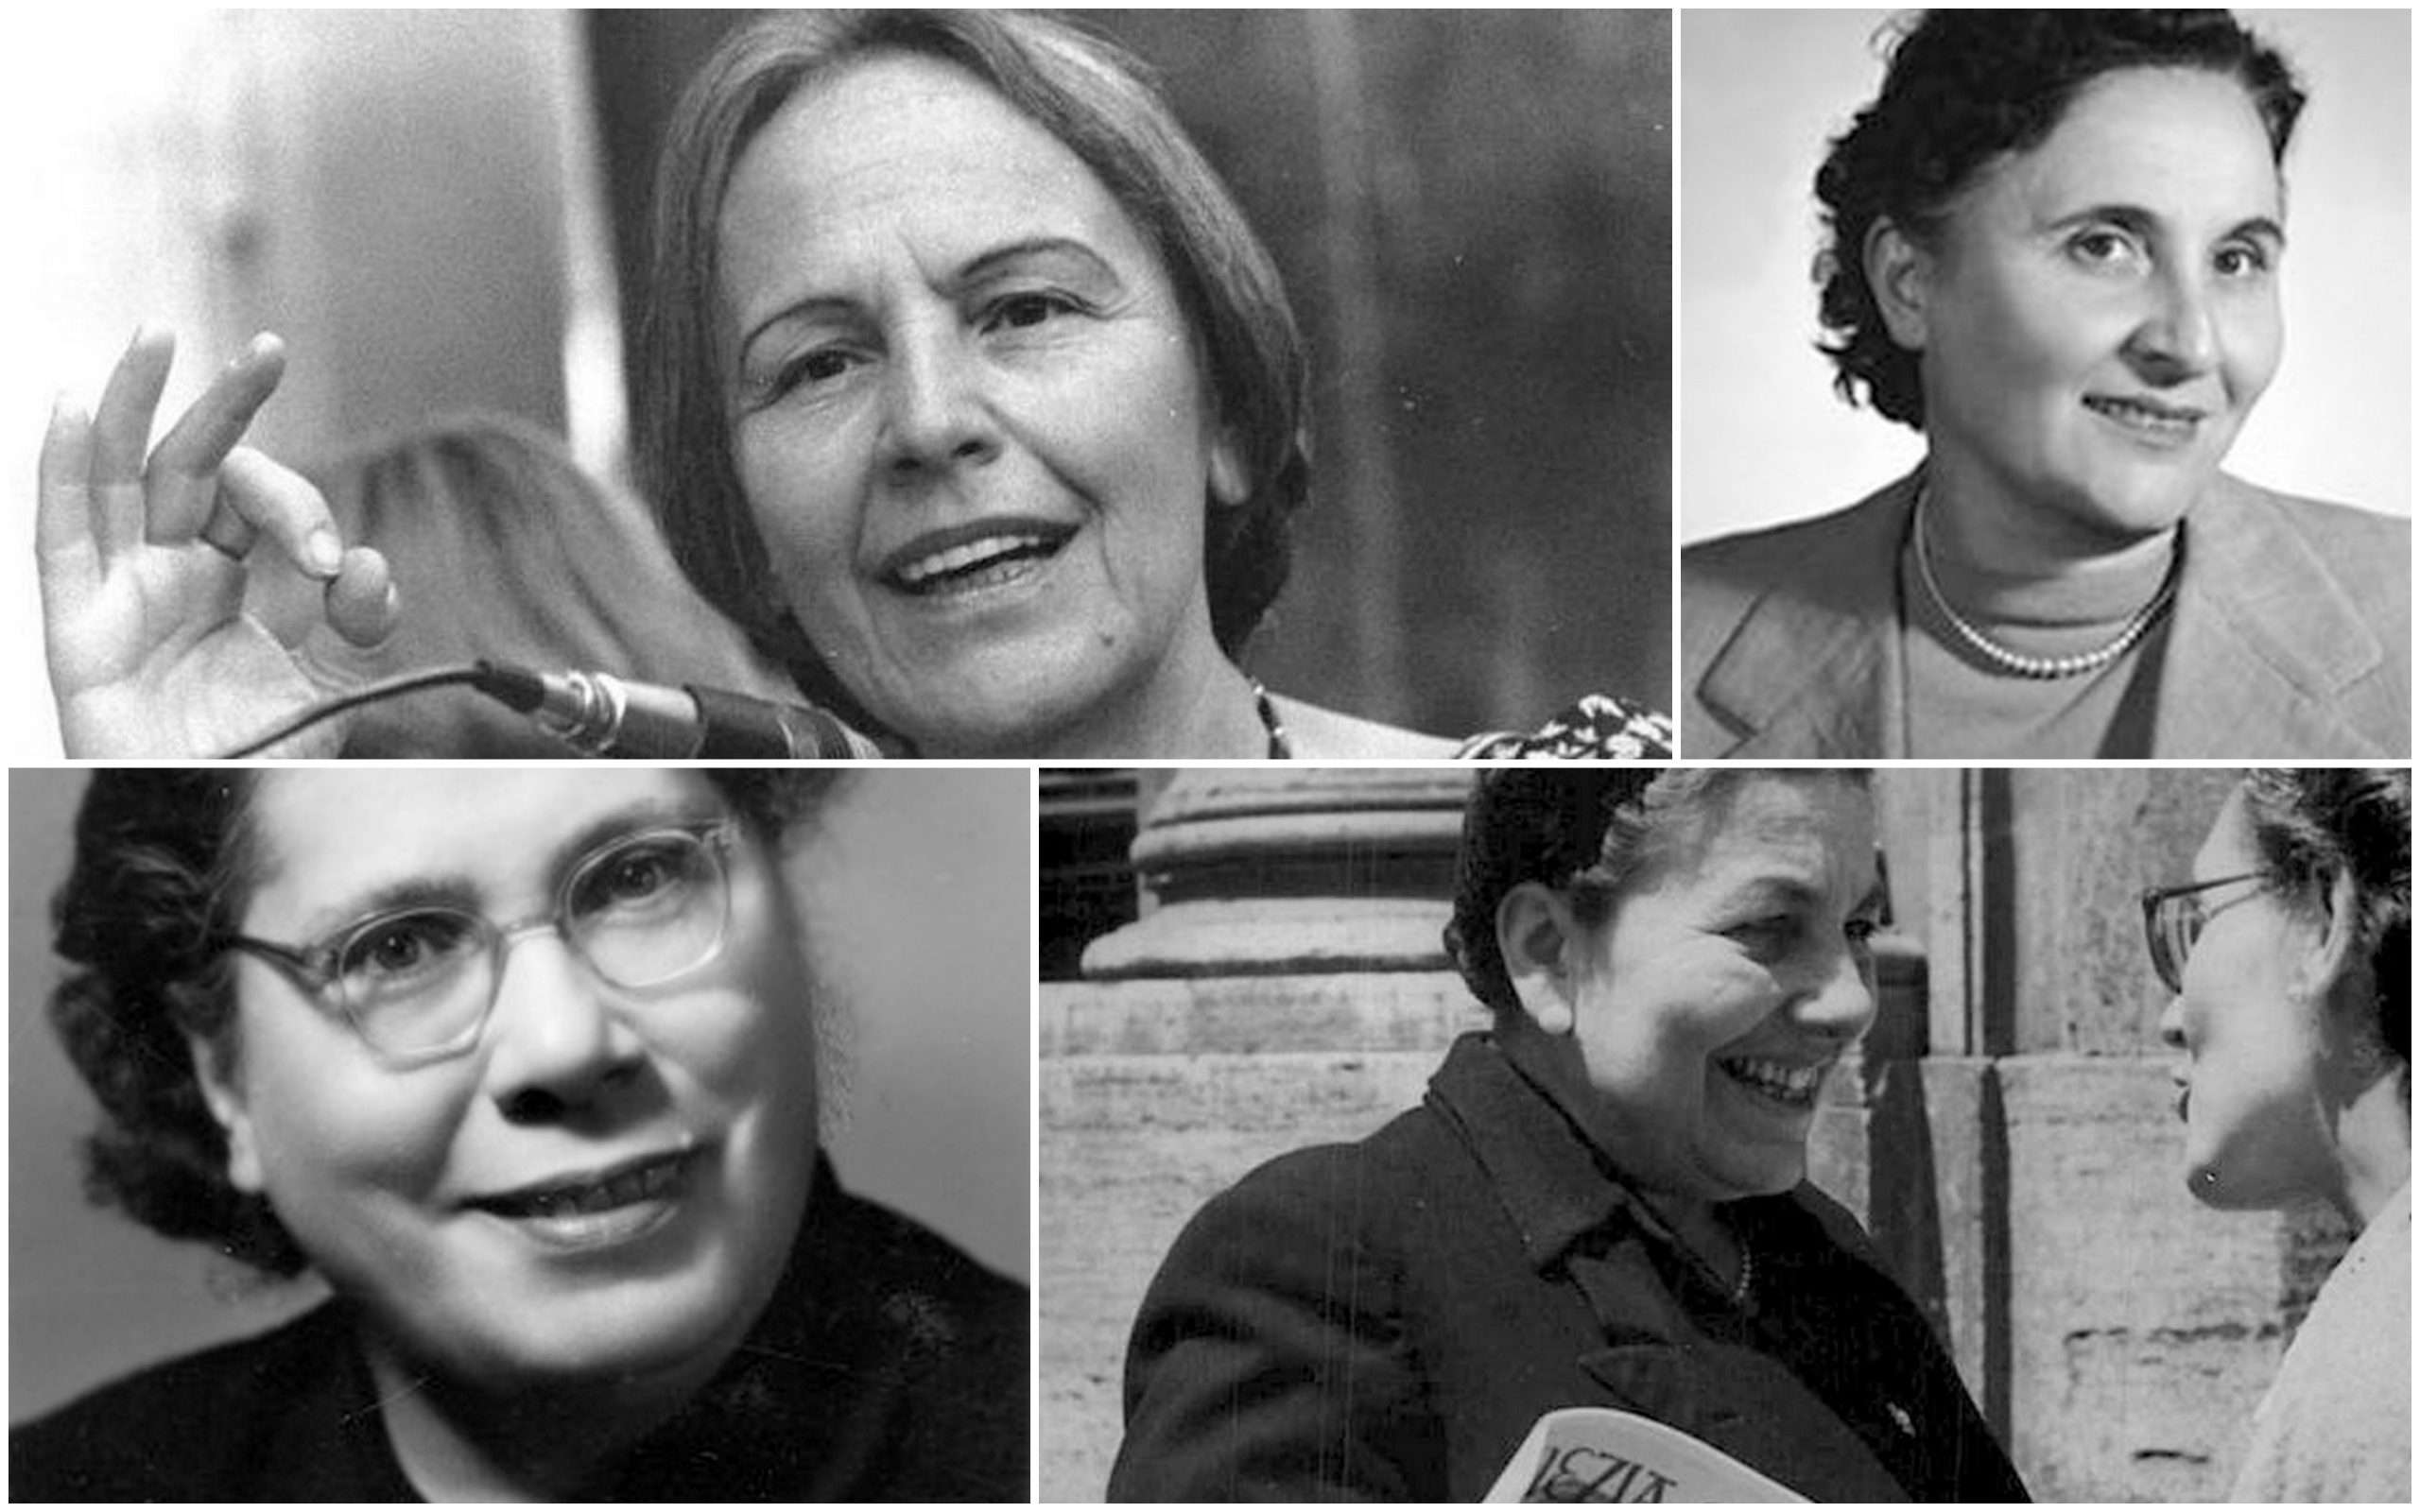 The women who made Italian political history: from top left to bottom right, Leonilde (Nilde) Iotti, Adele Bei, Noce Longo Teresa, Angela Maria Guidi Cingolani  